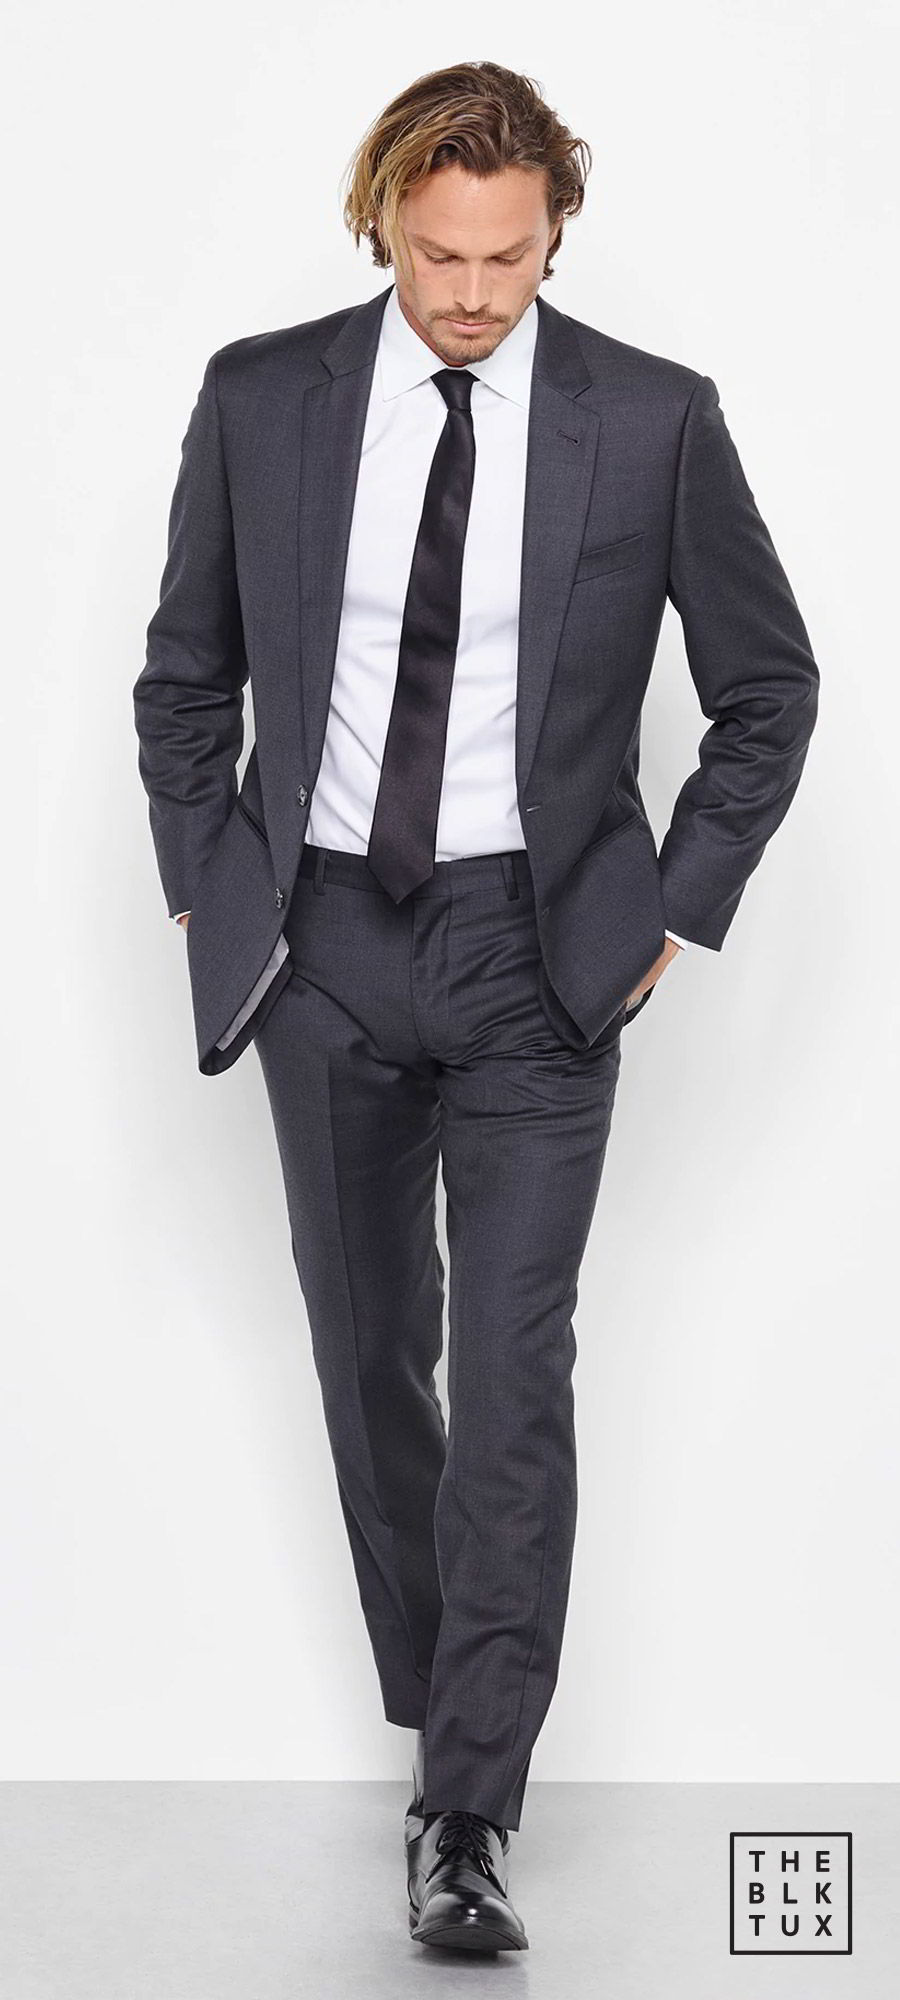 the black tux 2017 online tuxedo rental service charcoal suit groom groommen best man style